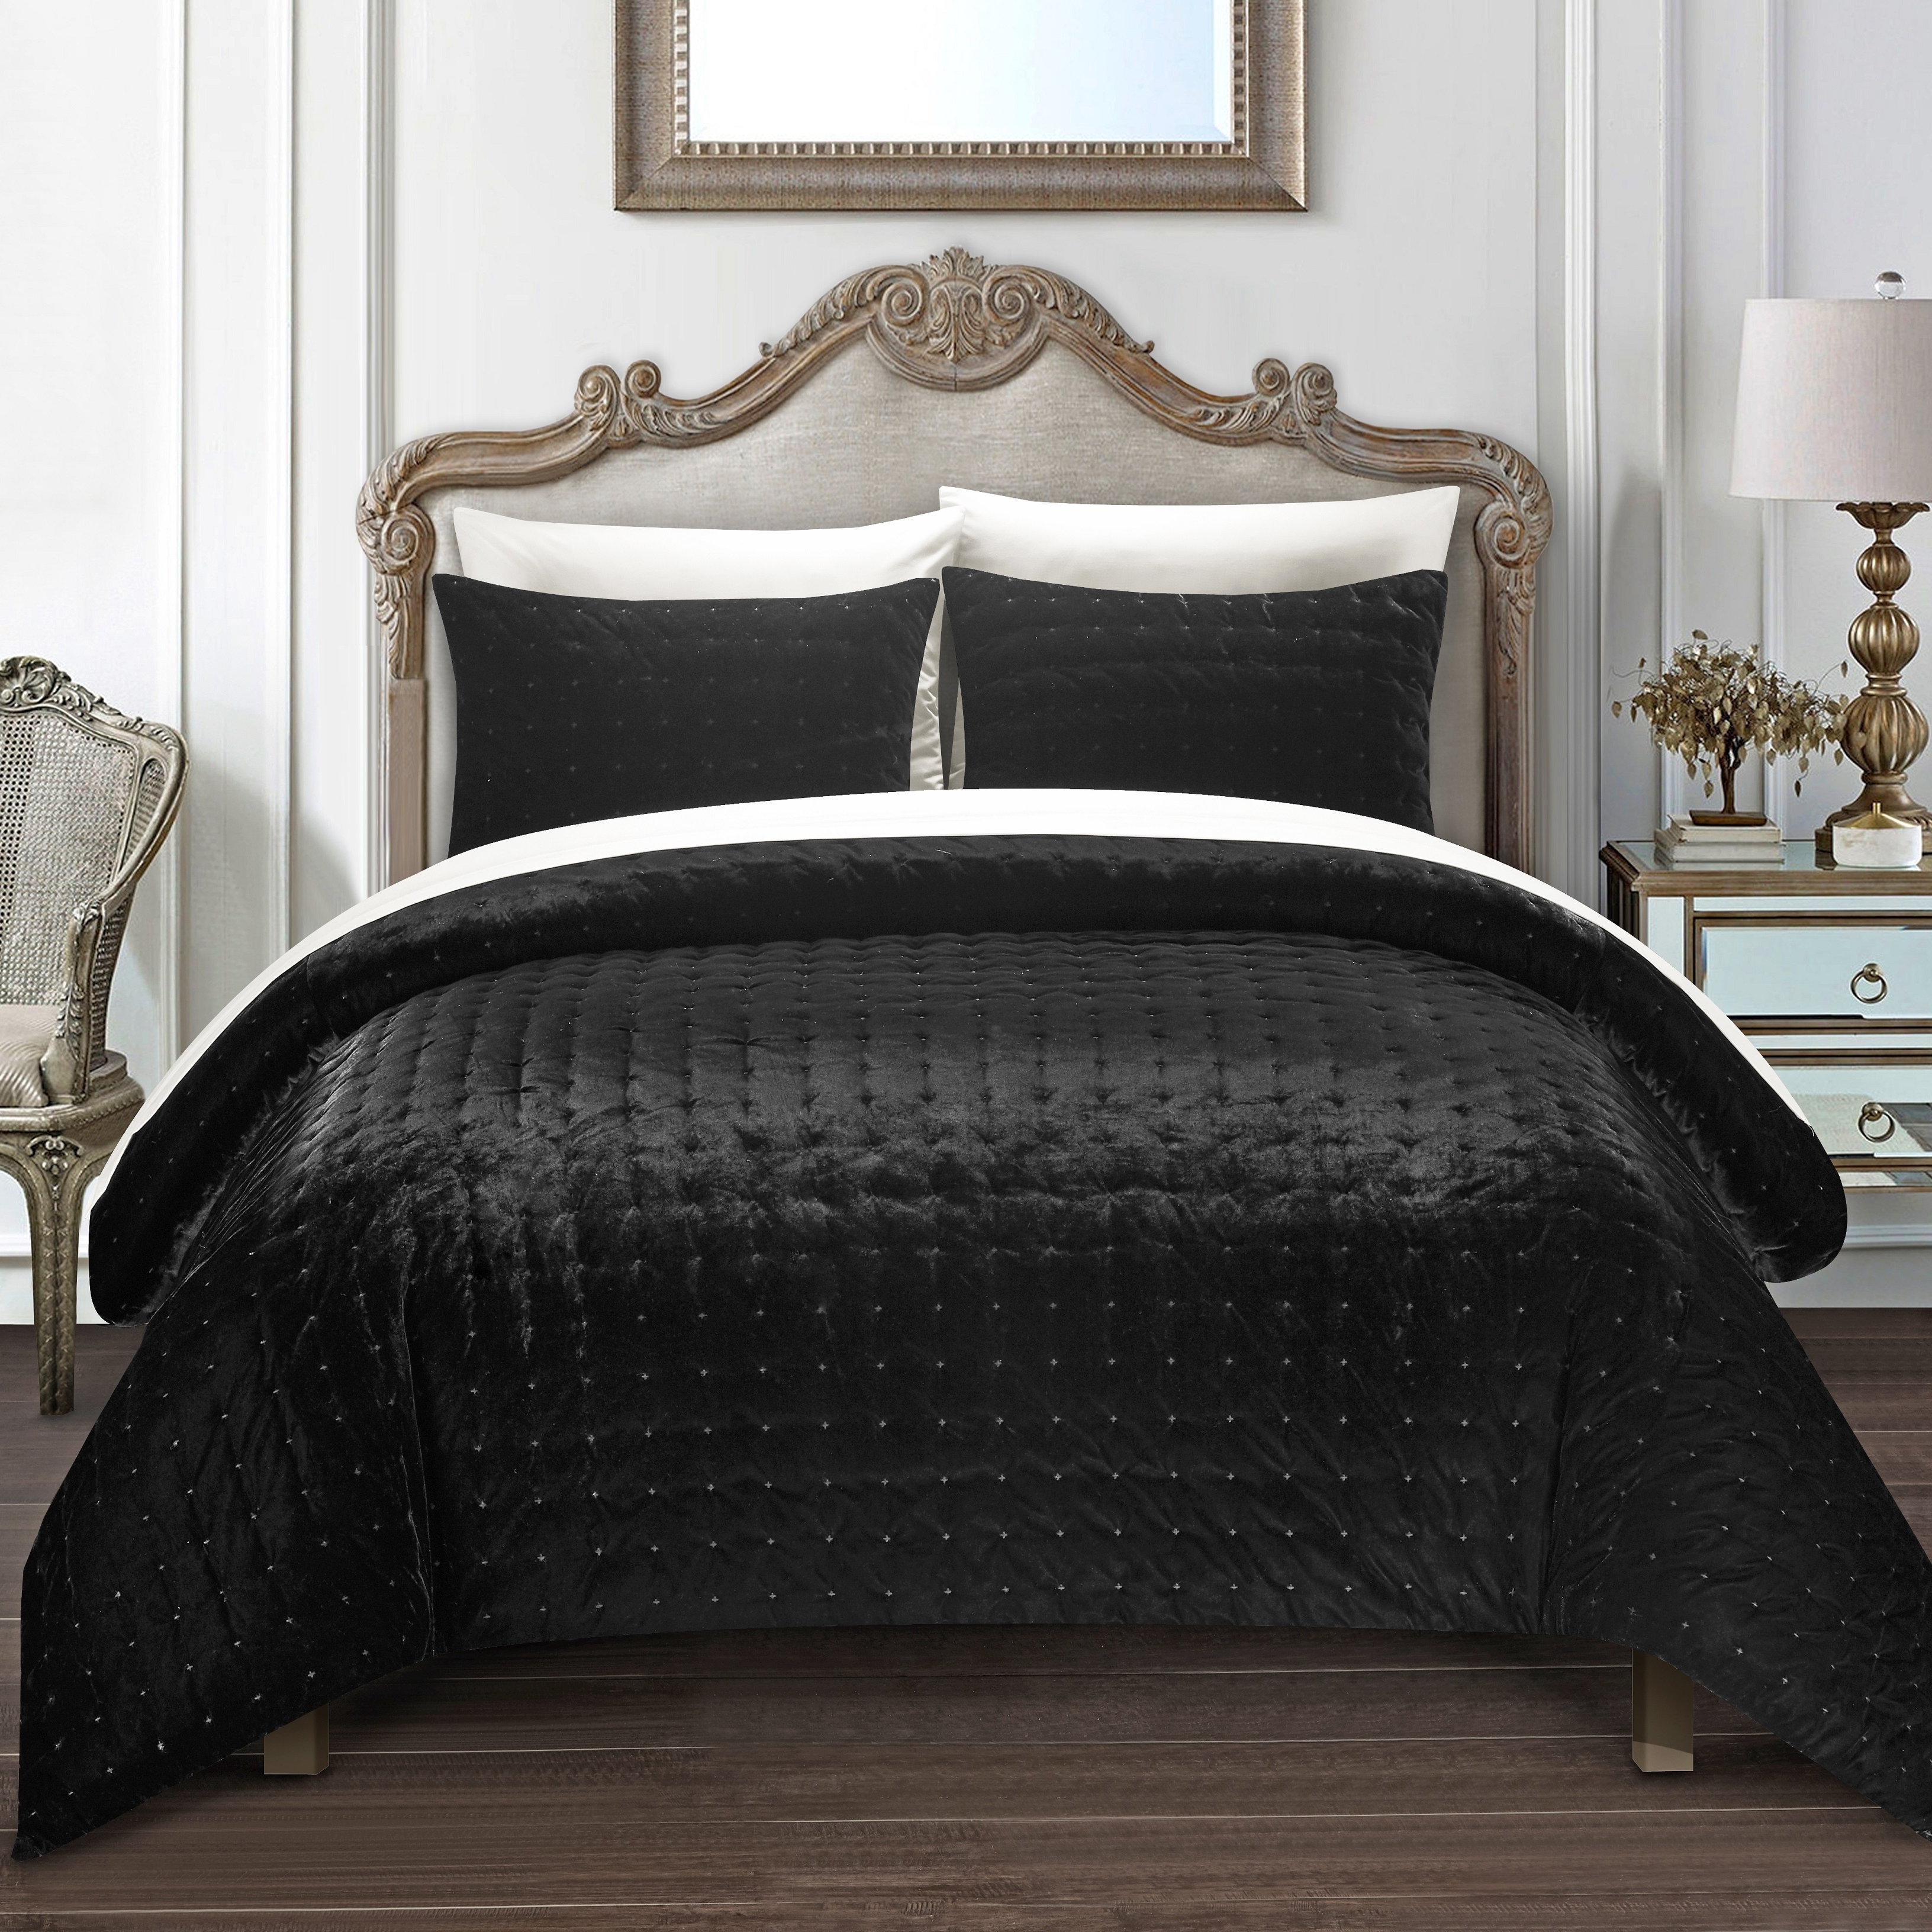 Chyna 3 Piece Comforter Set Luxurious Velvet Bedding - Black, Queen